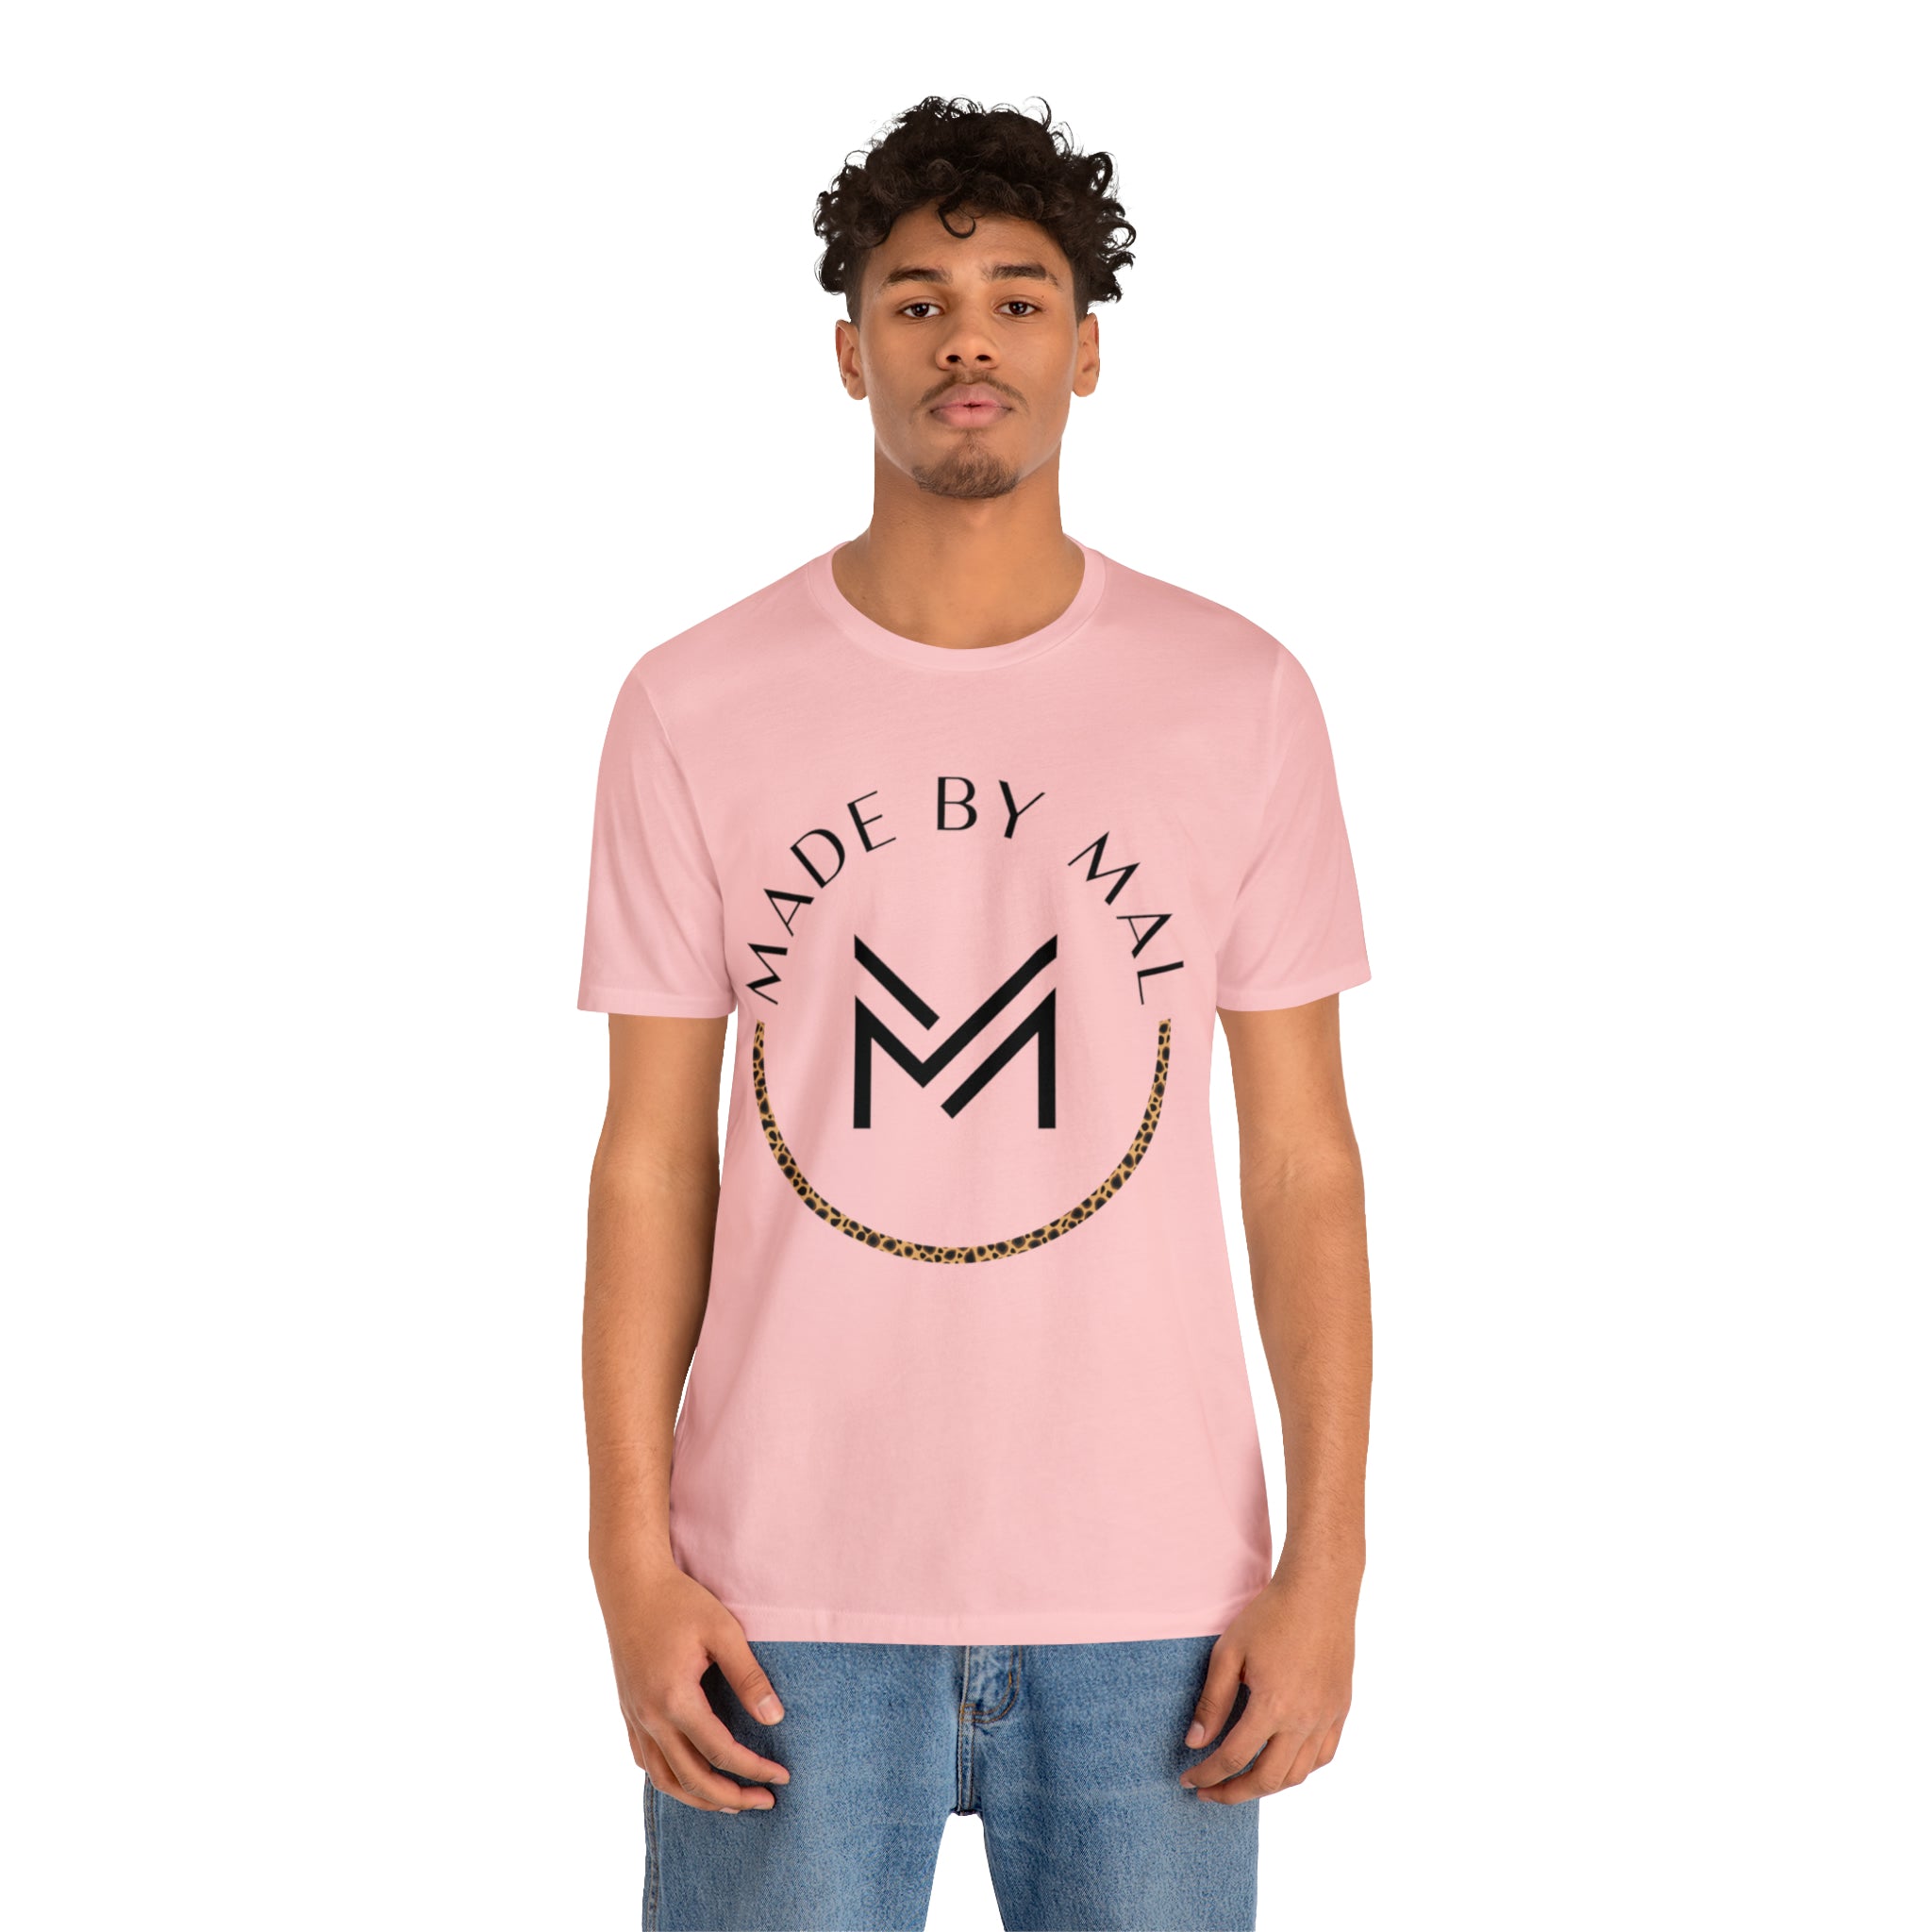 MBM Light Pink T Shirt